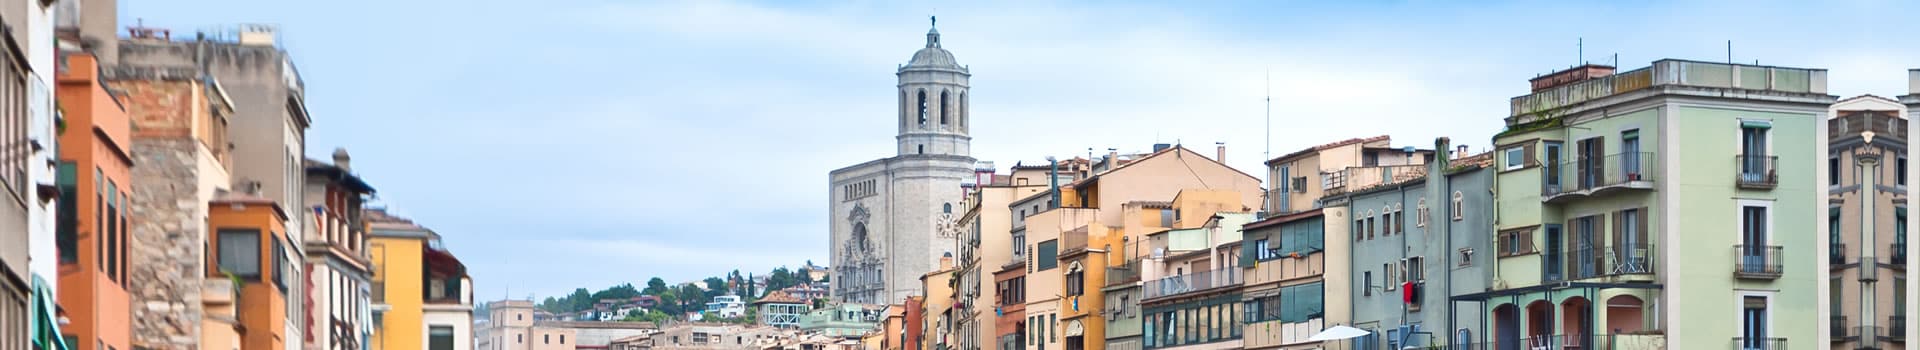 Florencia - Girona